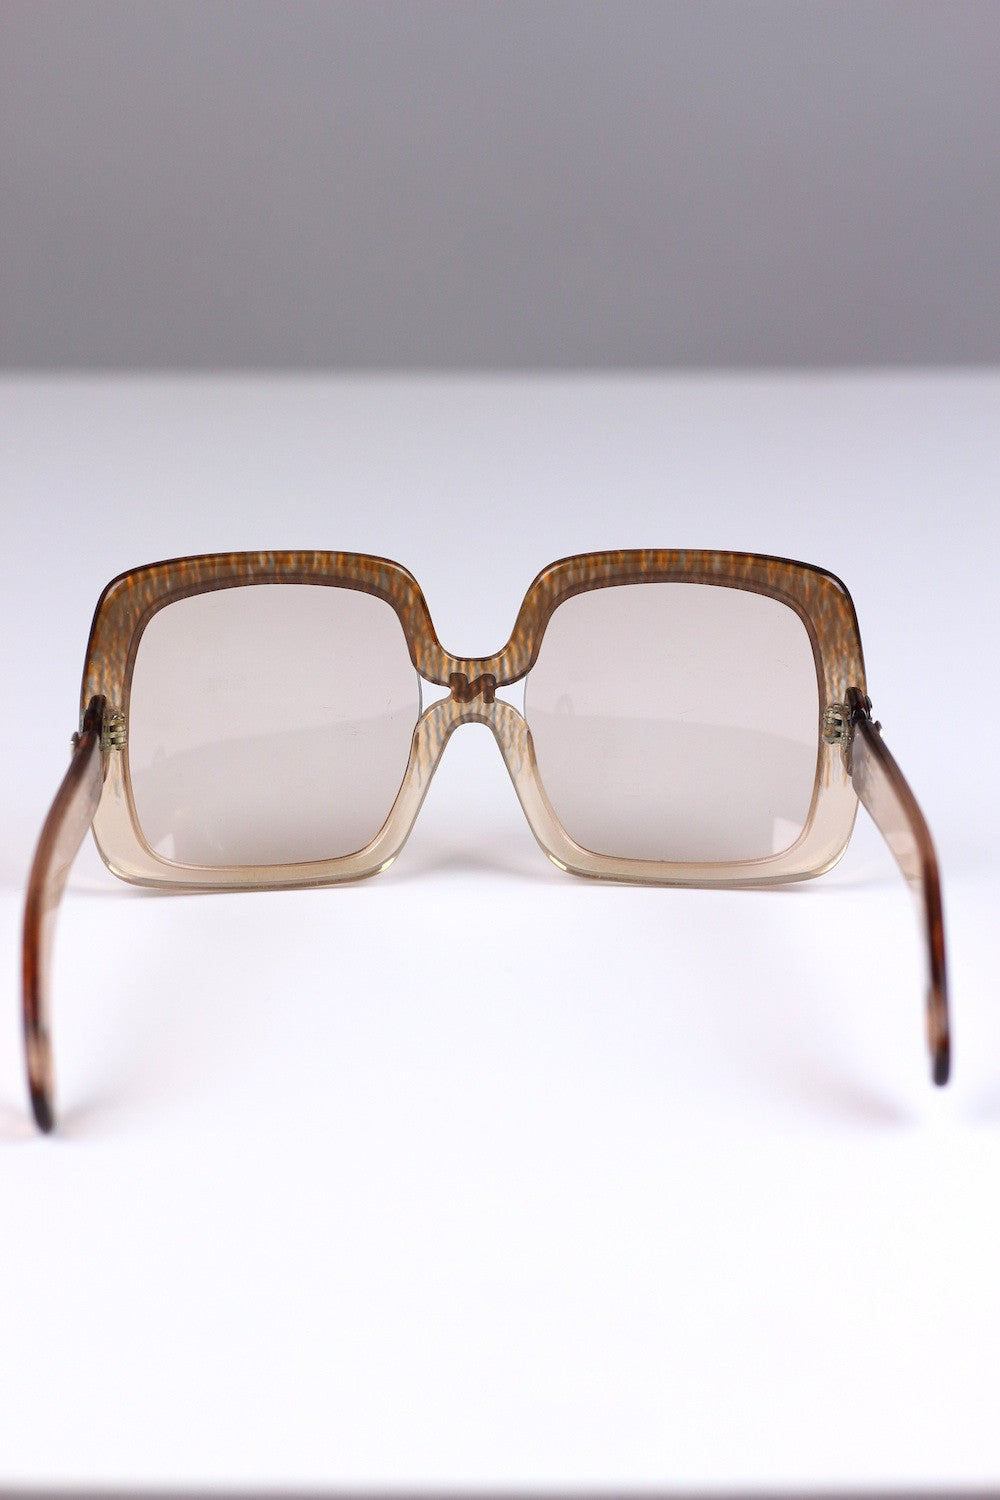 Vintage Jackie O Nina Ricci 1970s Sunglasses in Pale Brown